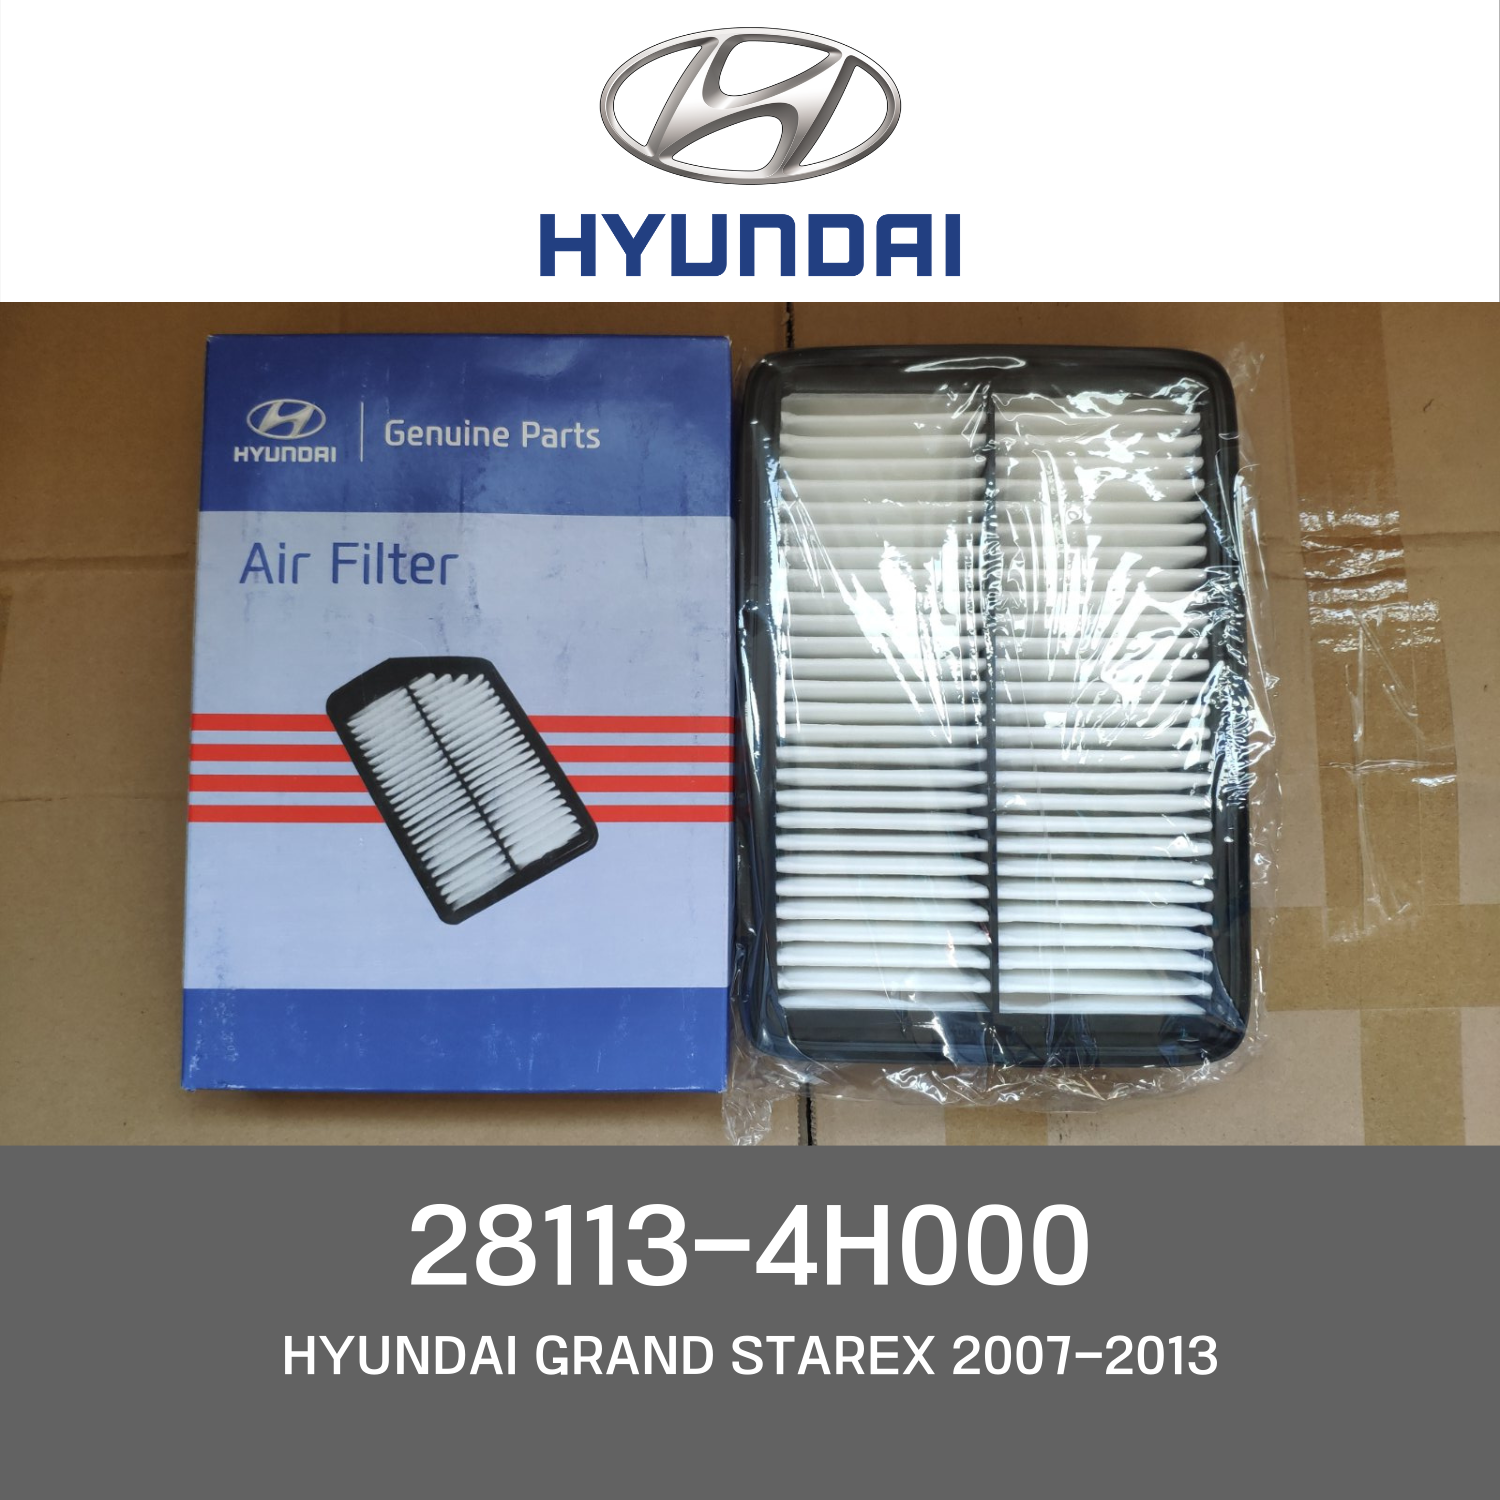 Air Filter for HYUNDAI GRAND STAREX 2007-2013 (Part No. 28113-4H000 ...